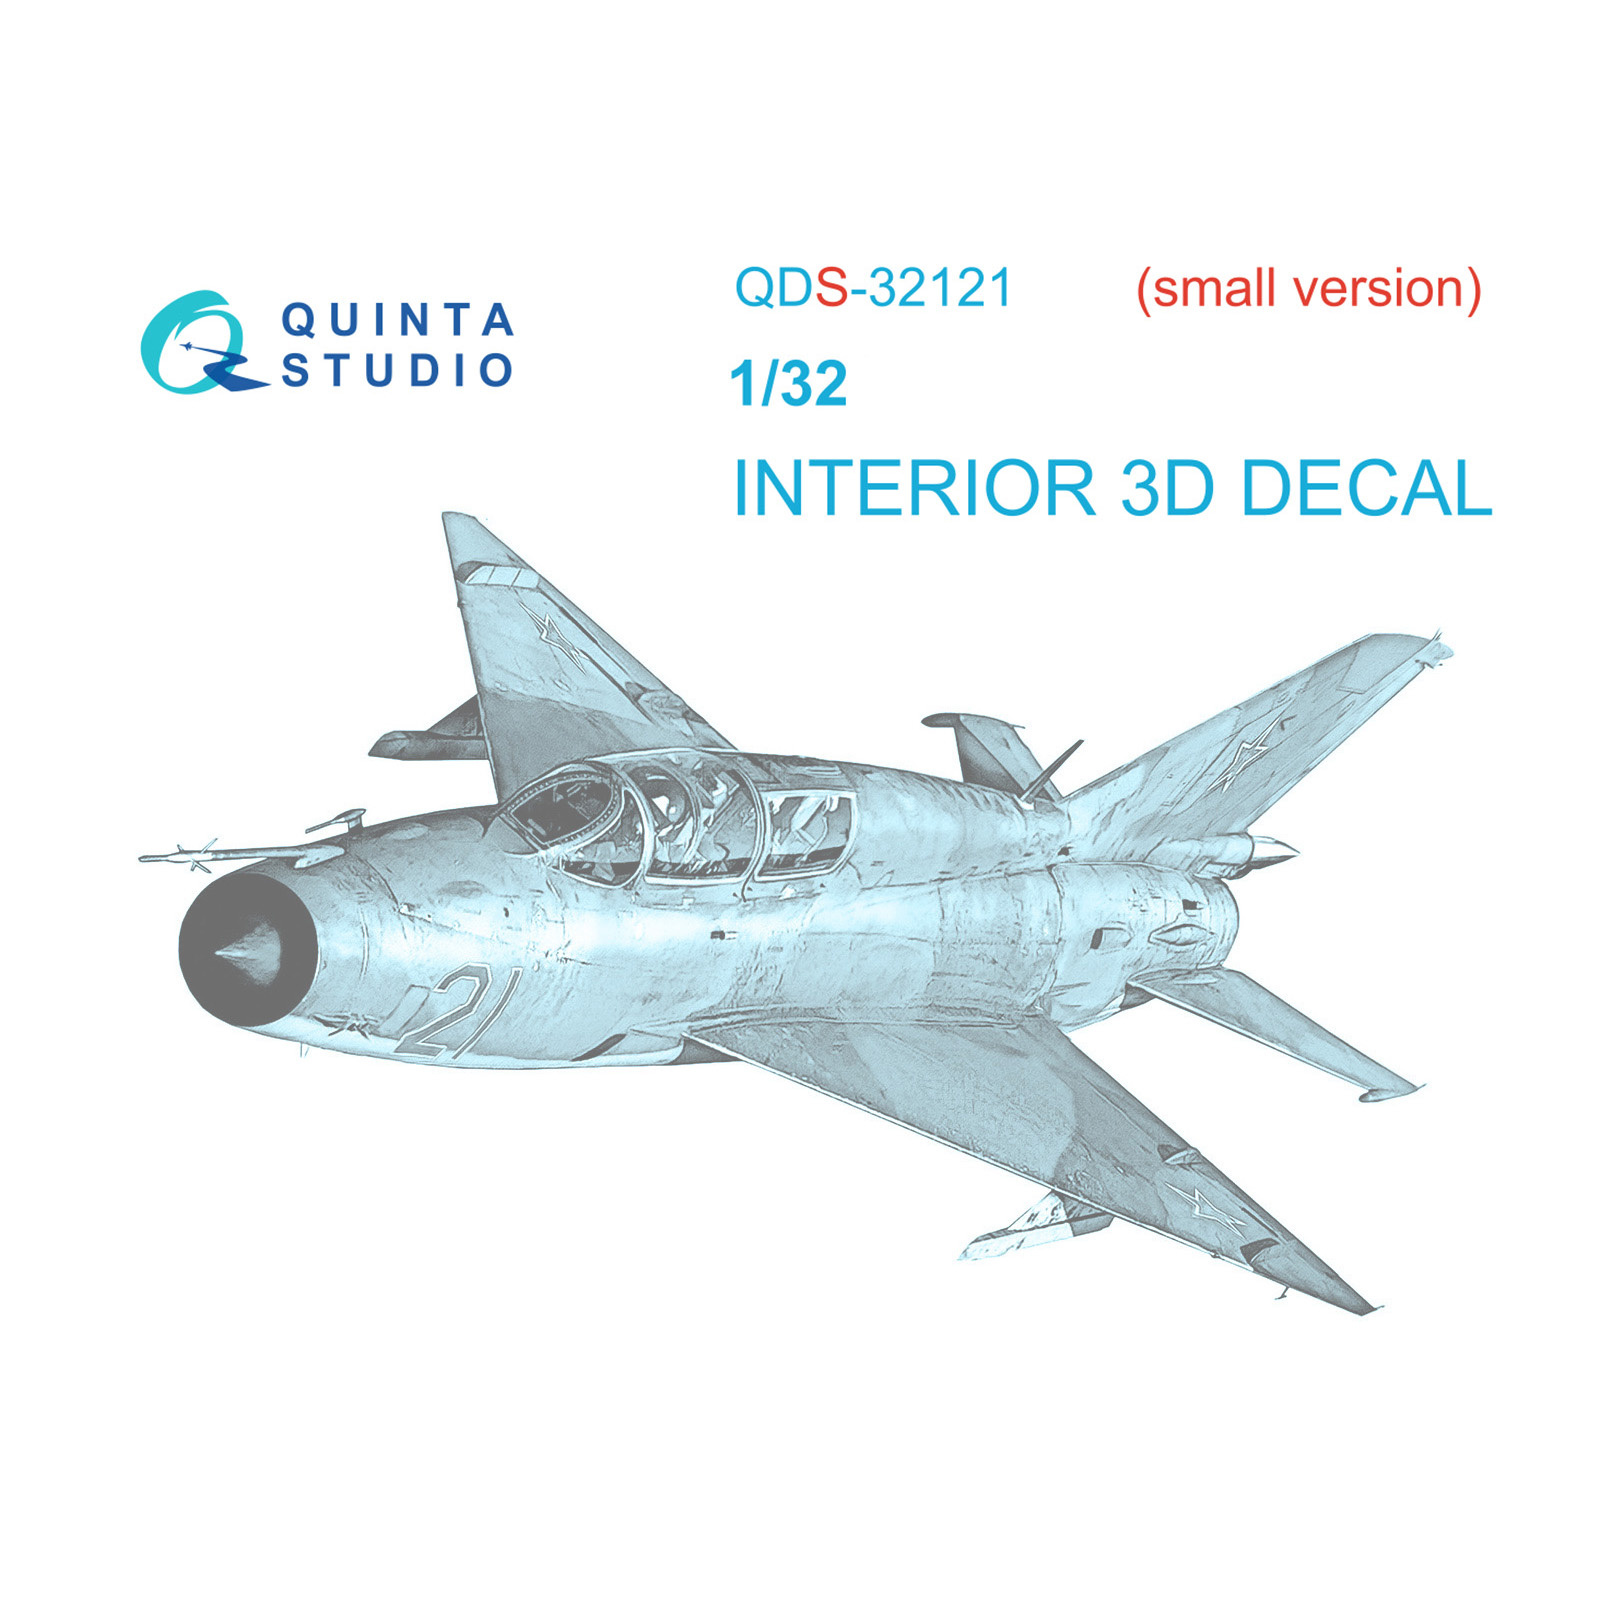 QDS-32121 Quinta Studio 1/32 3D Decal Cabin interior MiGG-21UM (Trumpeter) (Small version)